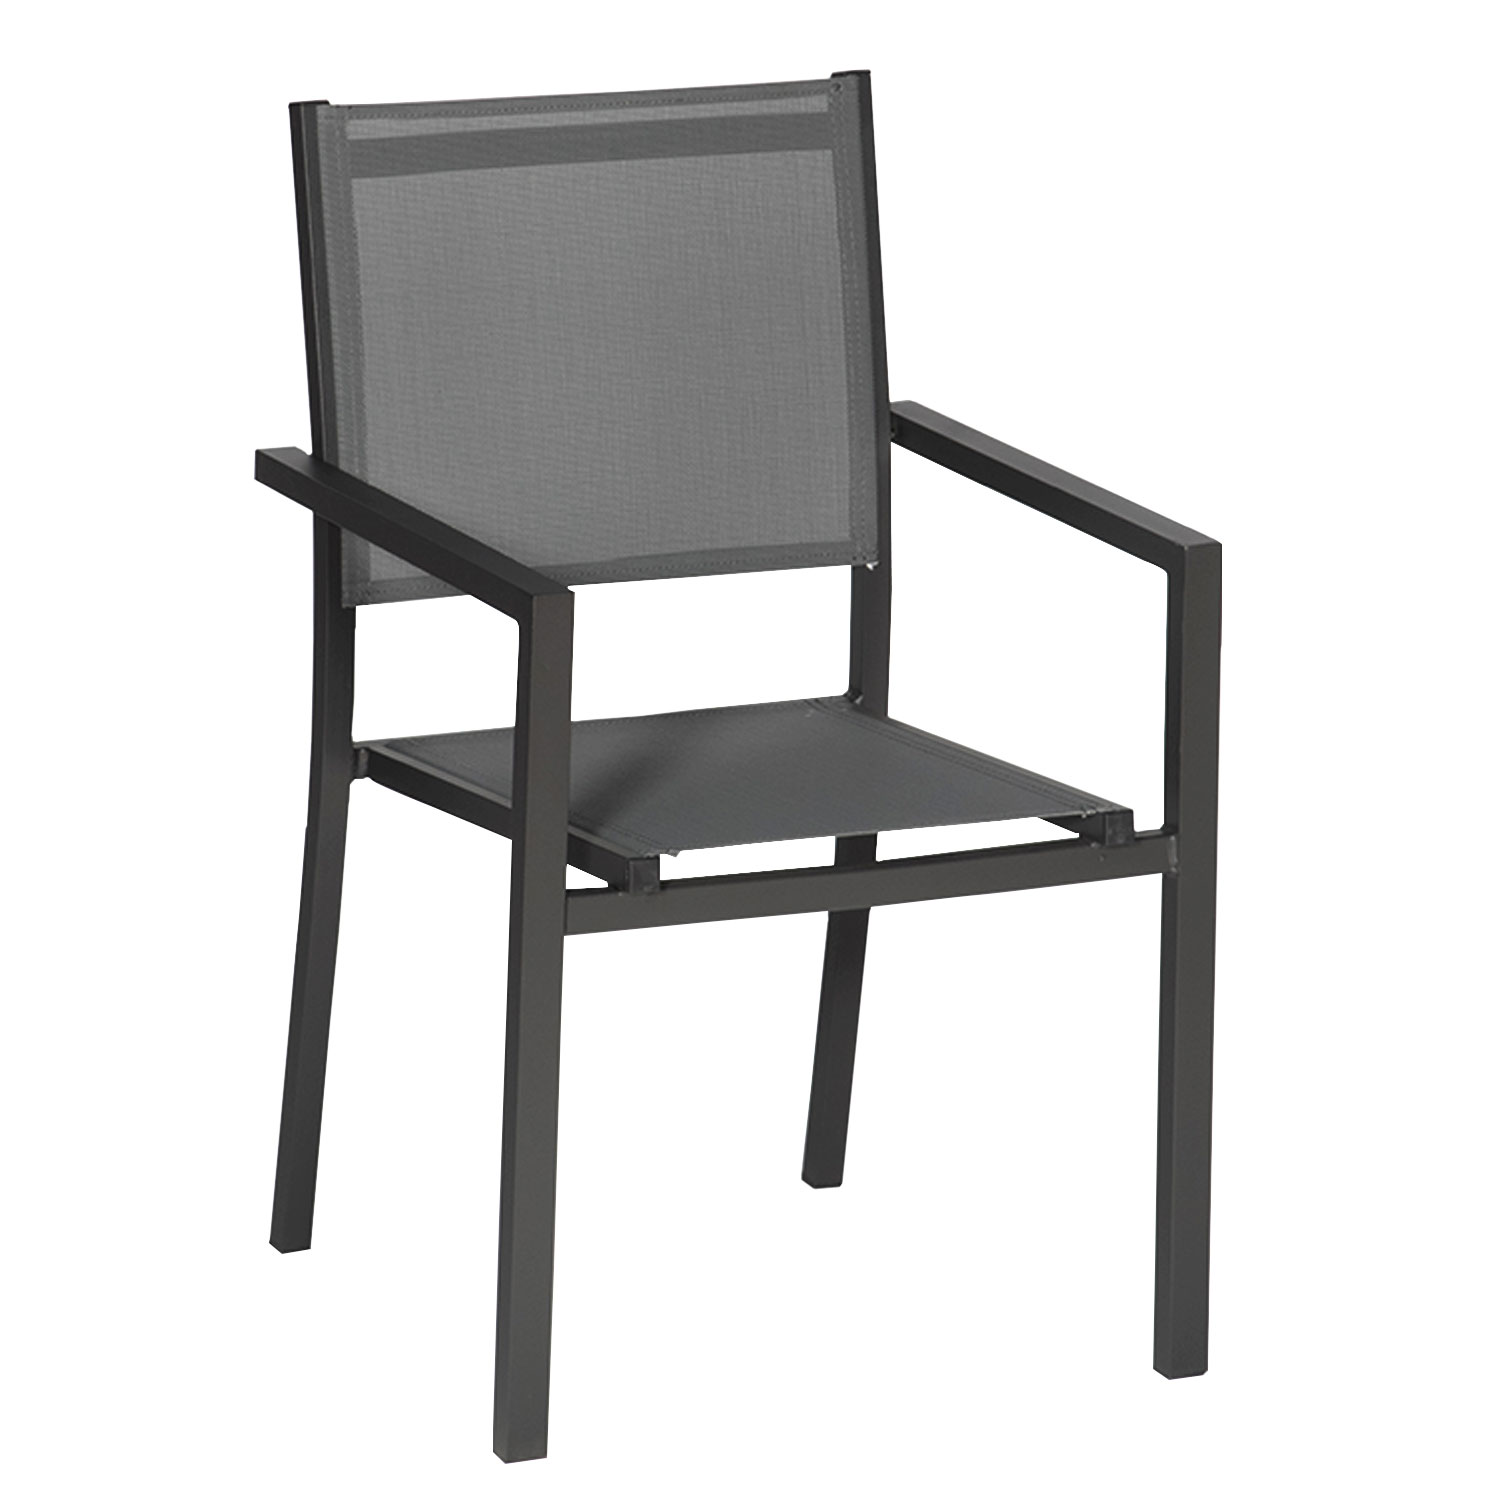 VENEZIA Verlengbare tuinset 180/300 in grijs textilene 10 zitplaatsen - aluminium antraciet